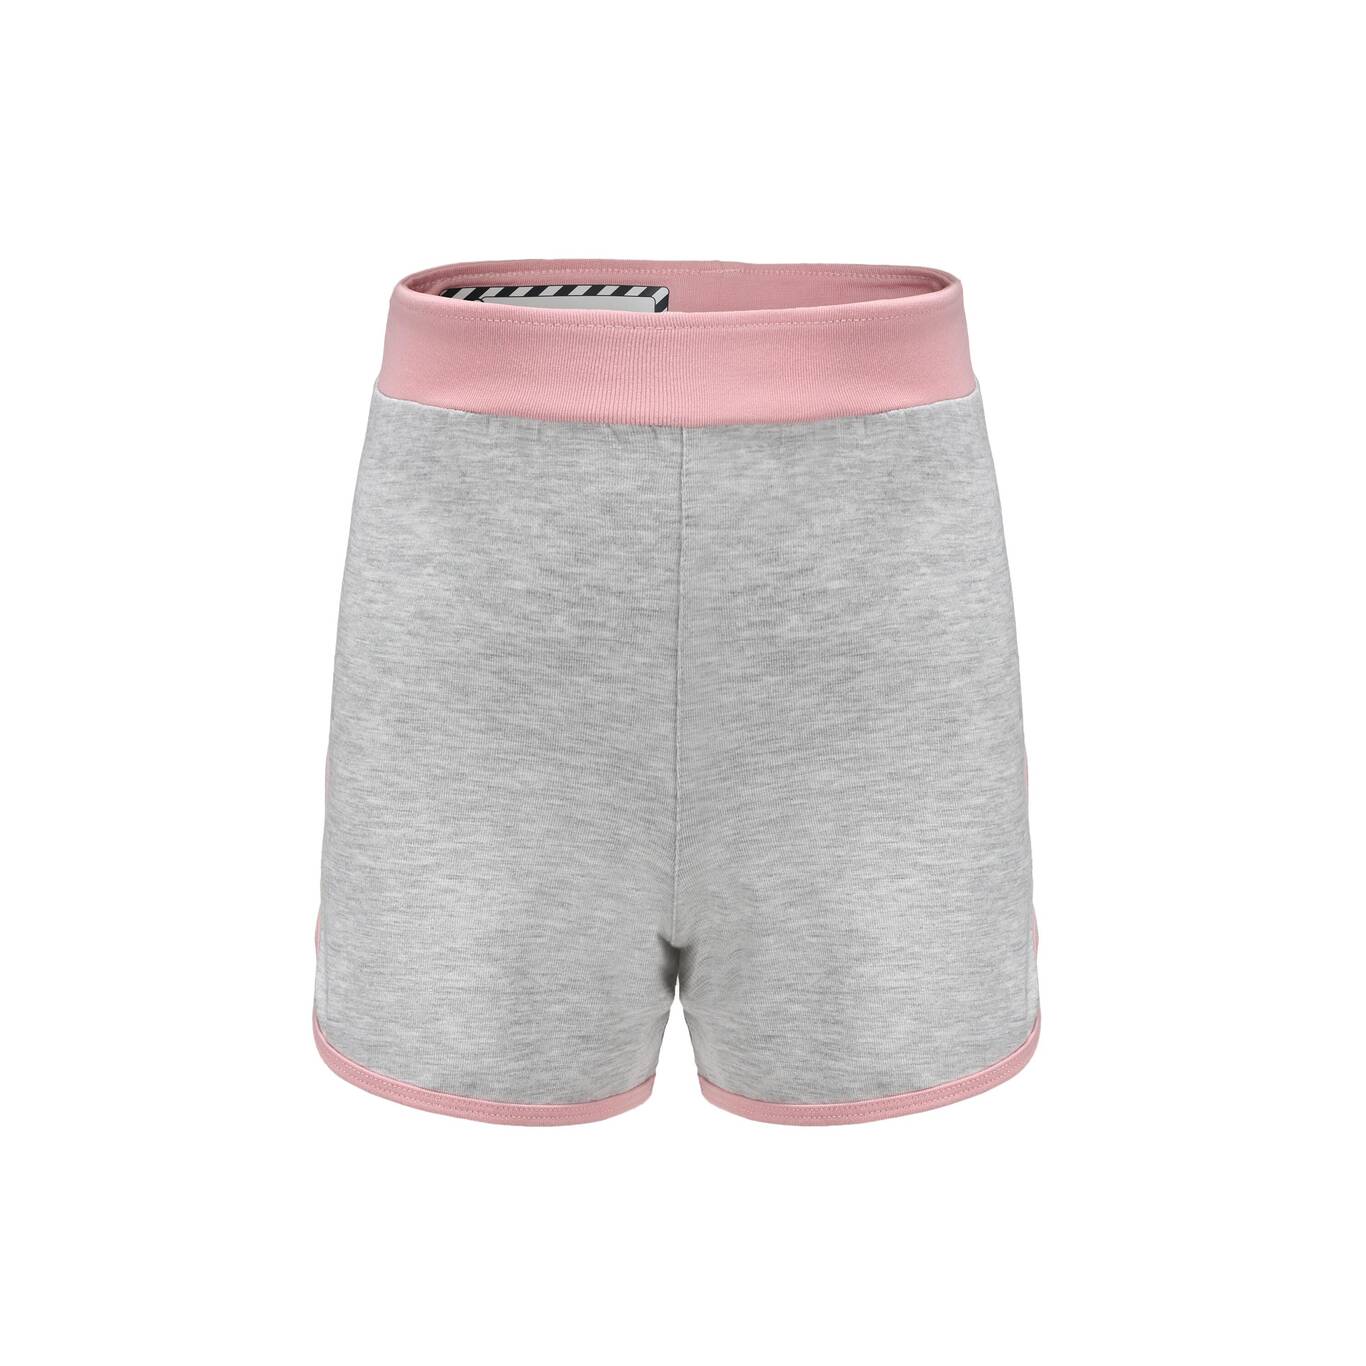 Girls' and Boys' Baby Gym Shorts 500 - Light Grey